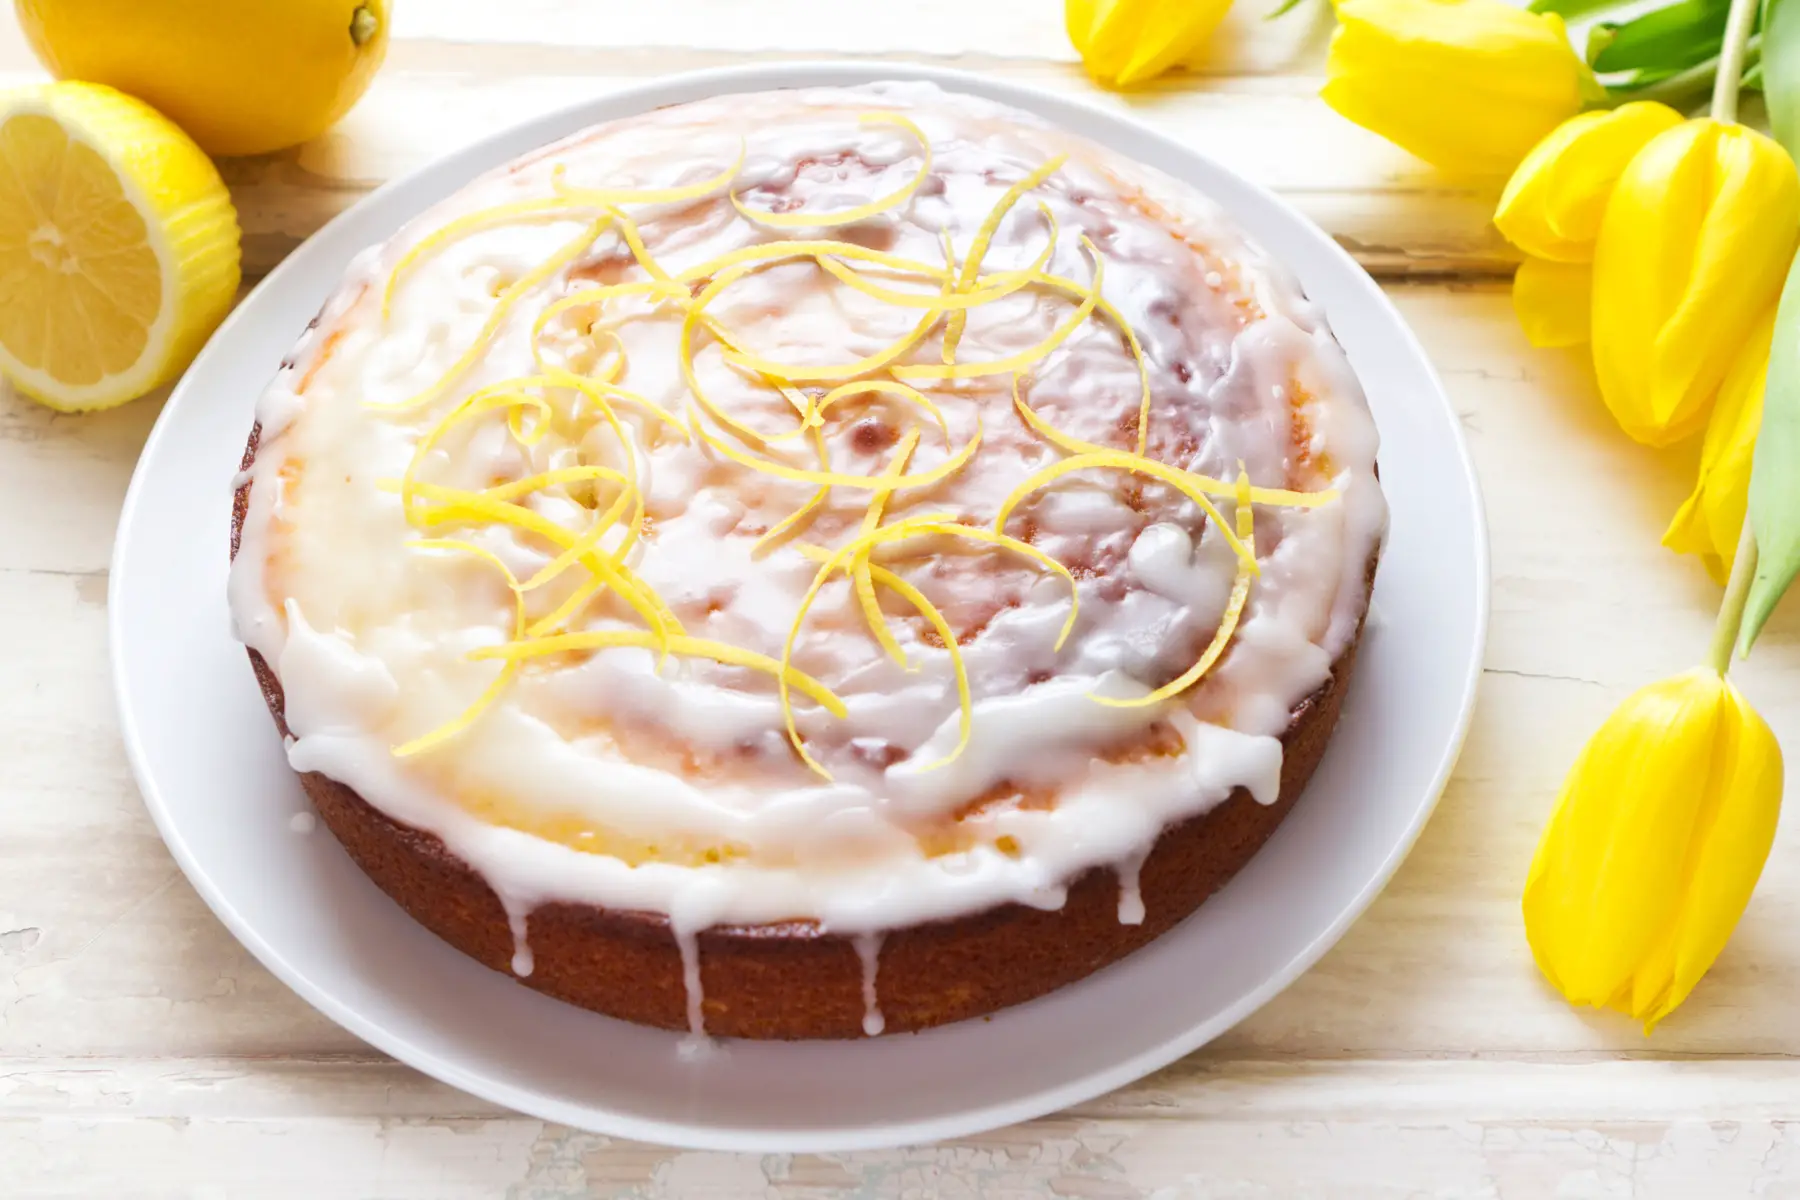 Lemon drizzle cake